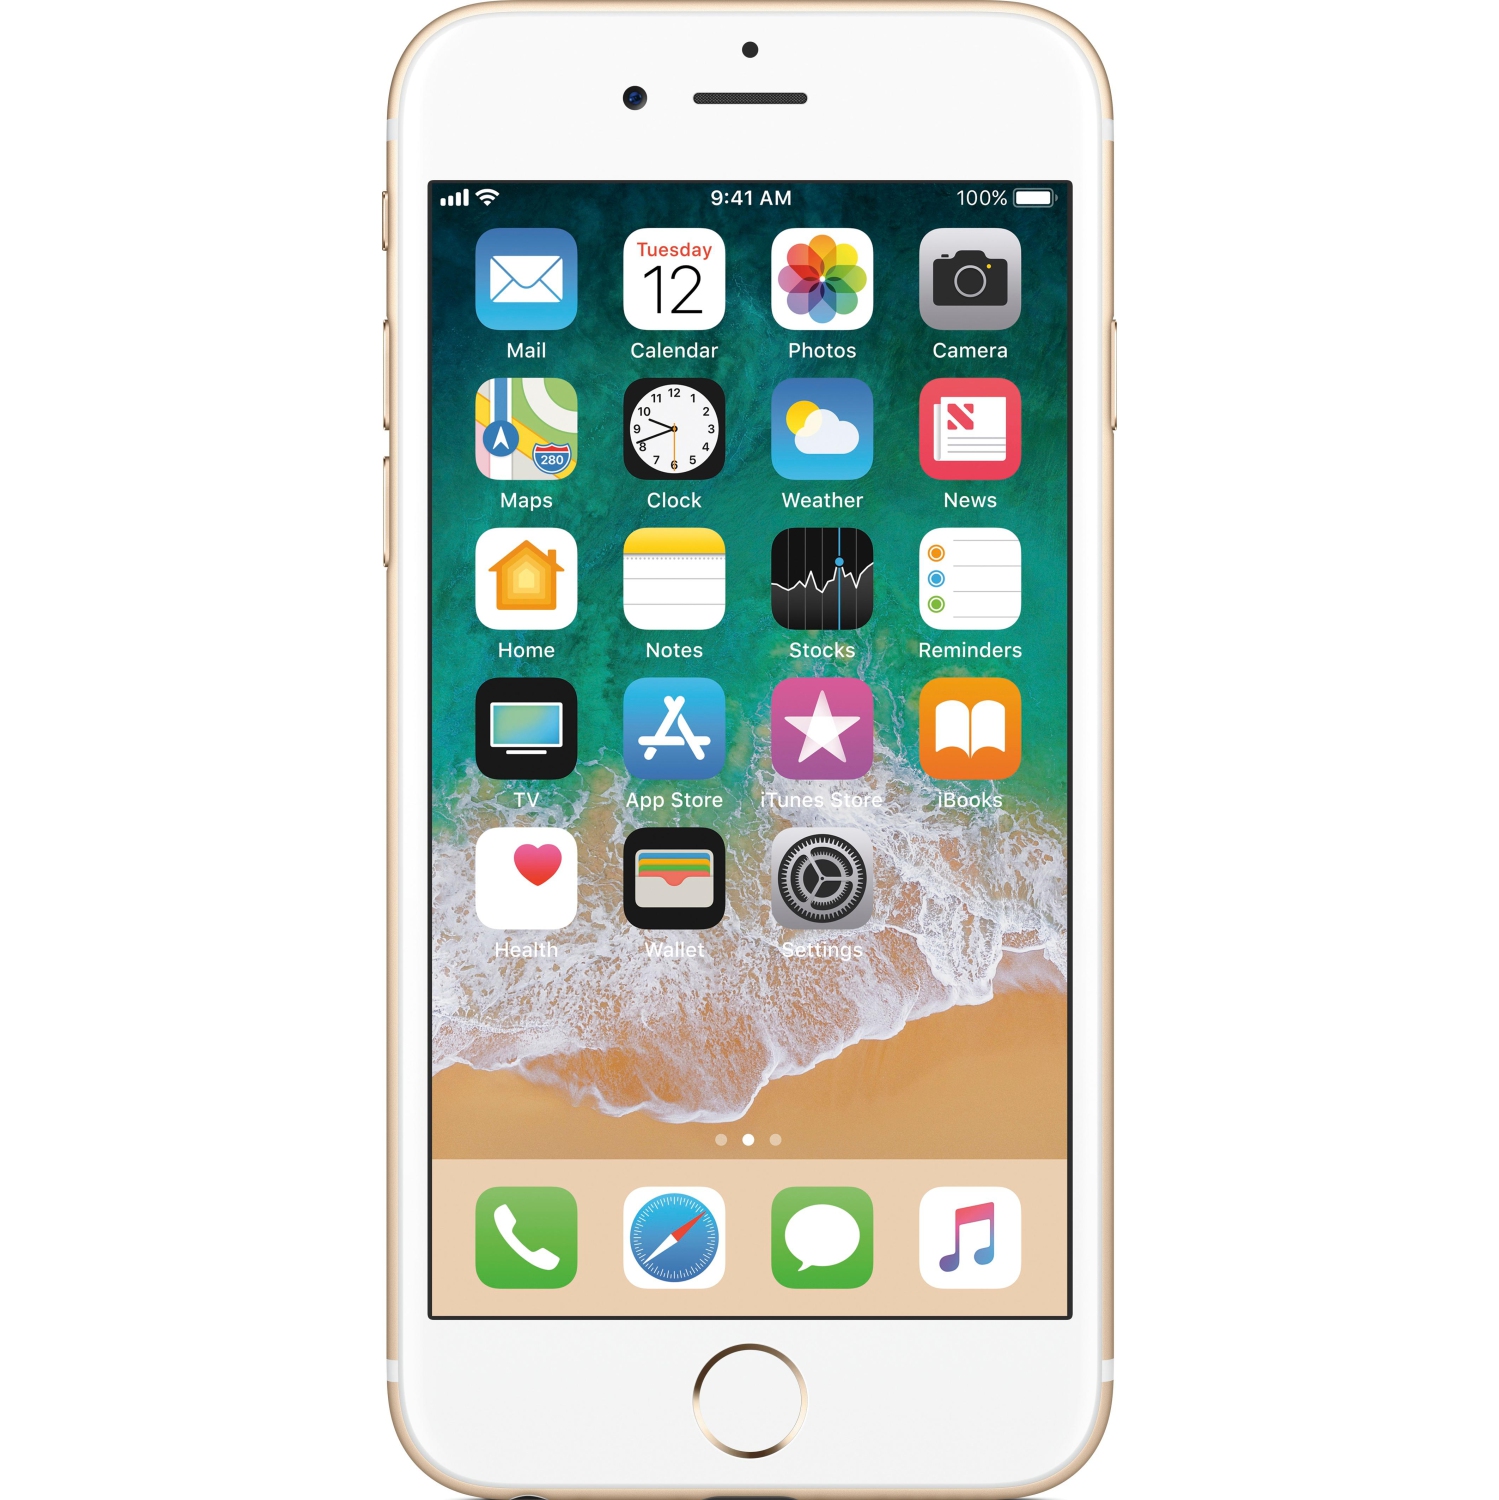 Apple iPhone 6s 16GB Smartphone - Gold - Unlocked - Open Box